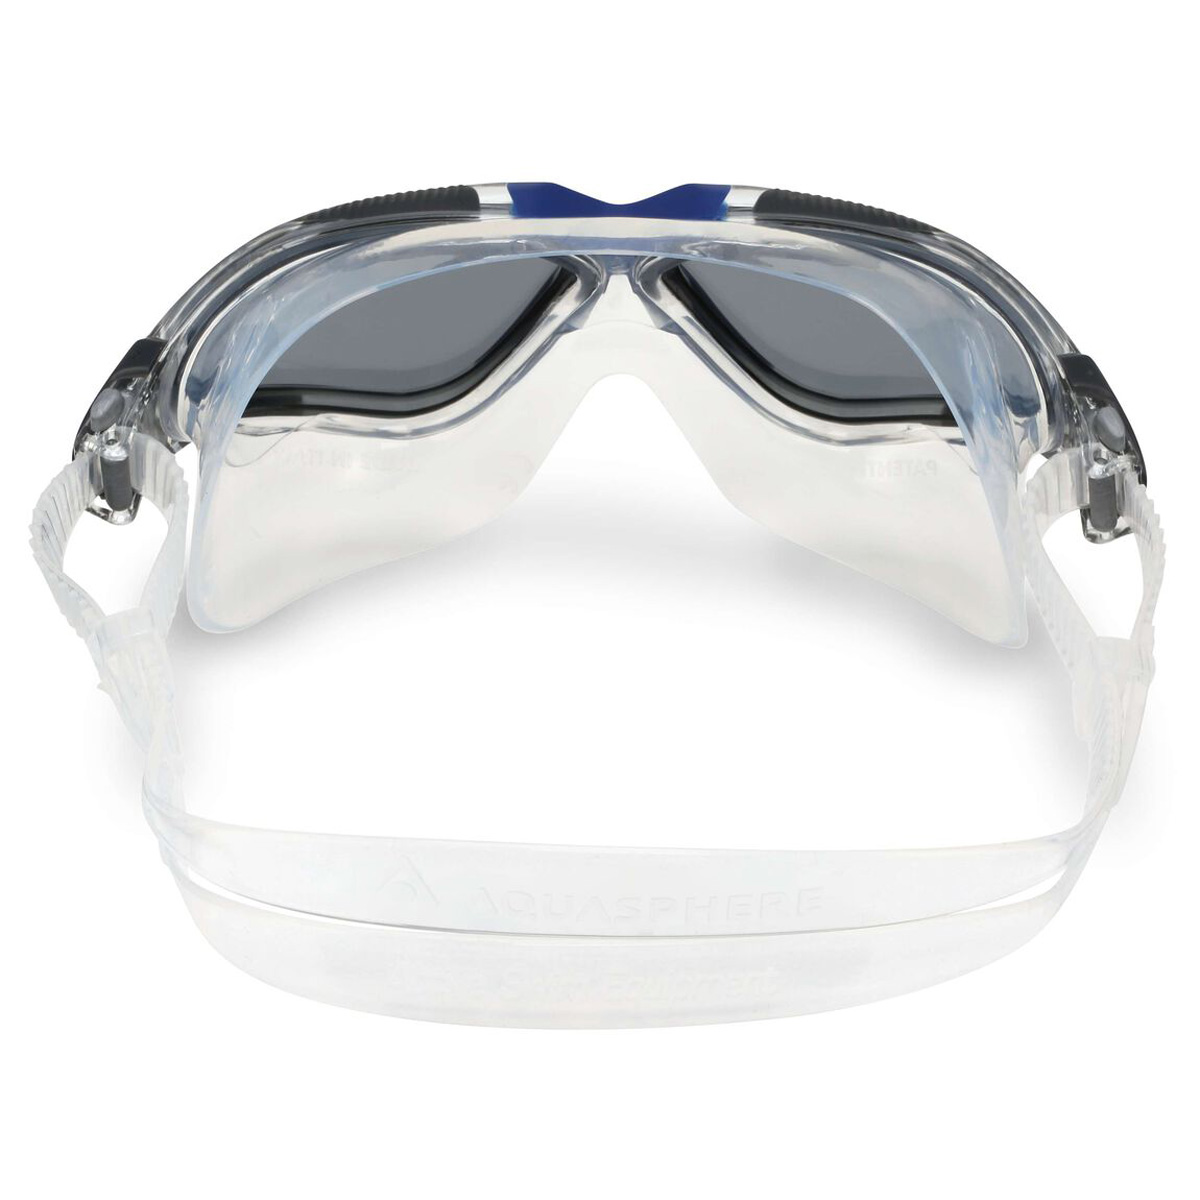 Aqua Sphere Vista Smoke Lens Goggles - Dark Grey